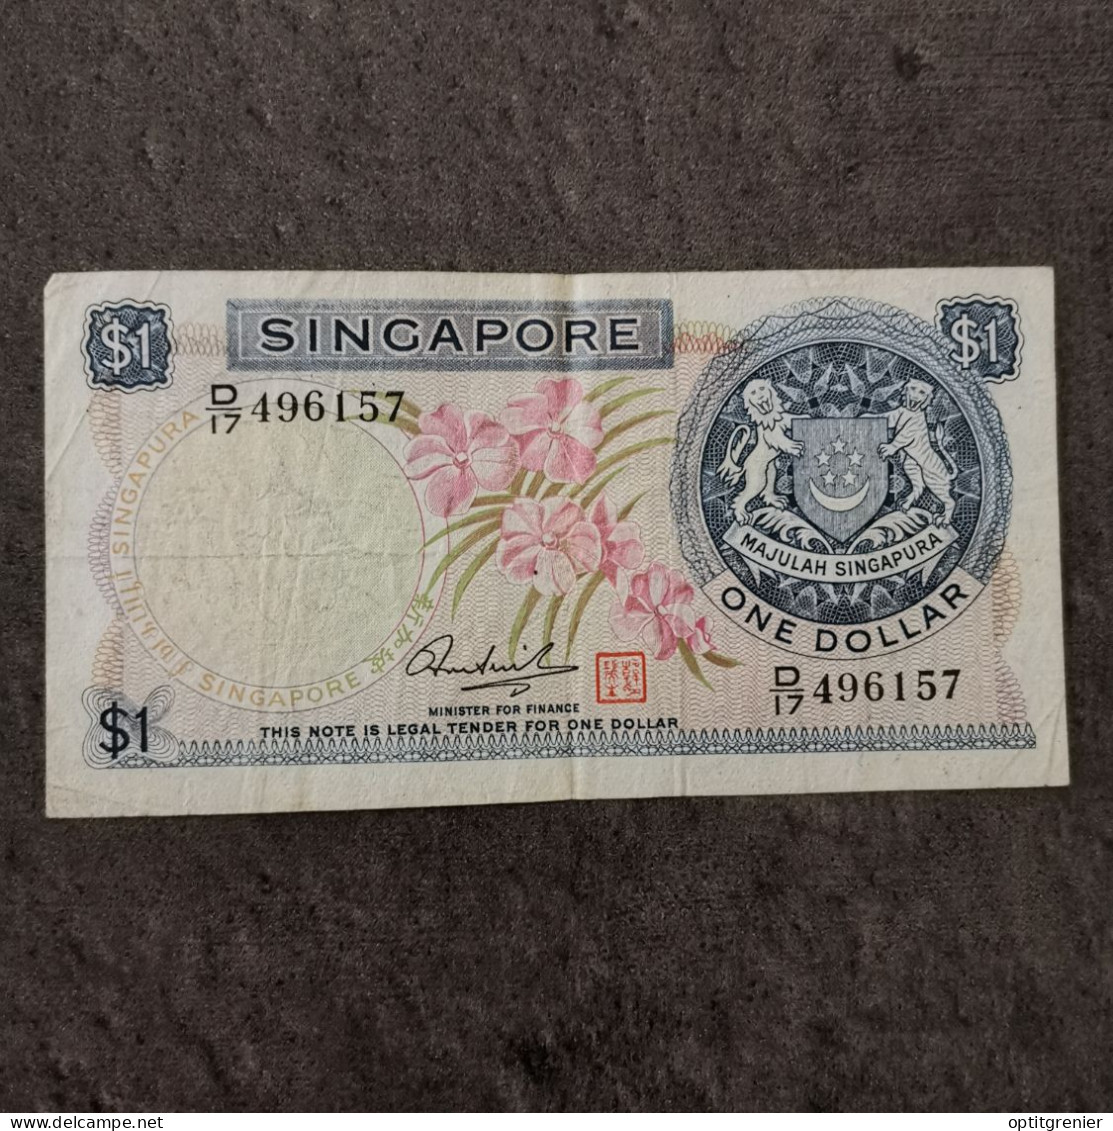 BILLET CIRCULE 1 DOLLAR 1972 SINGAPOUR / SINGAPORE BANKNOTE - Singapur